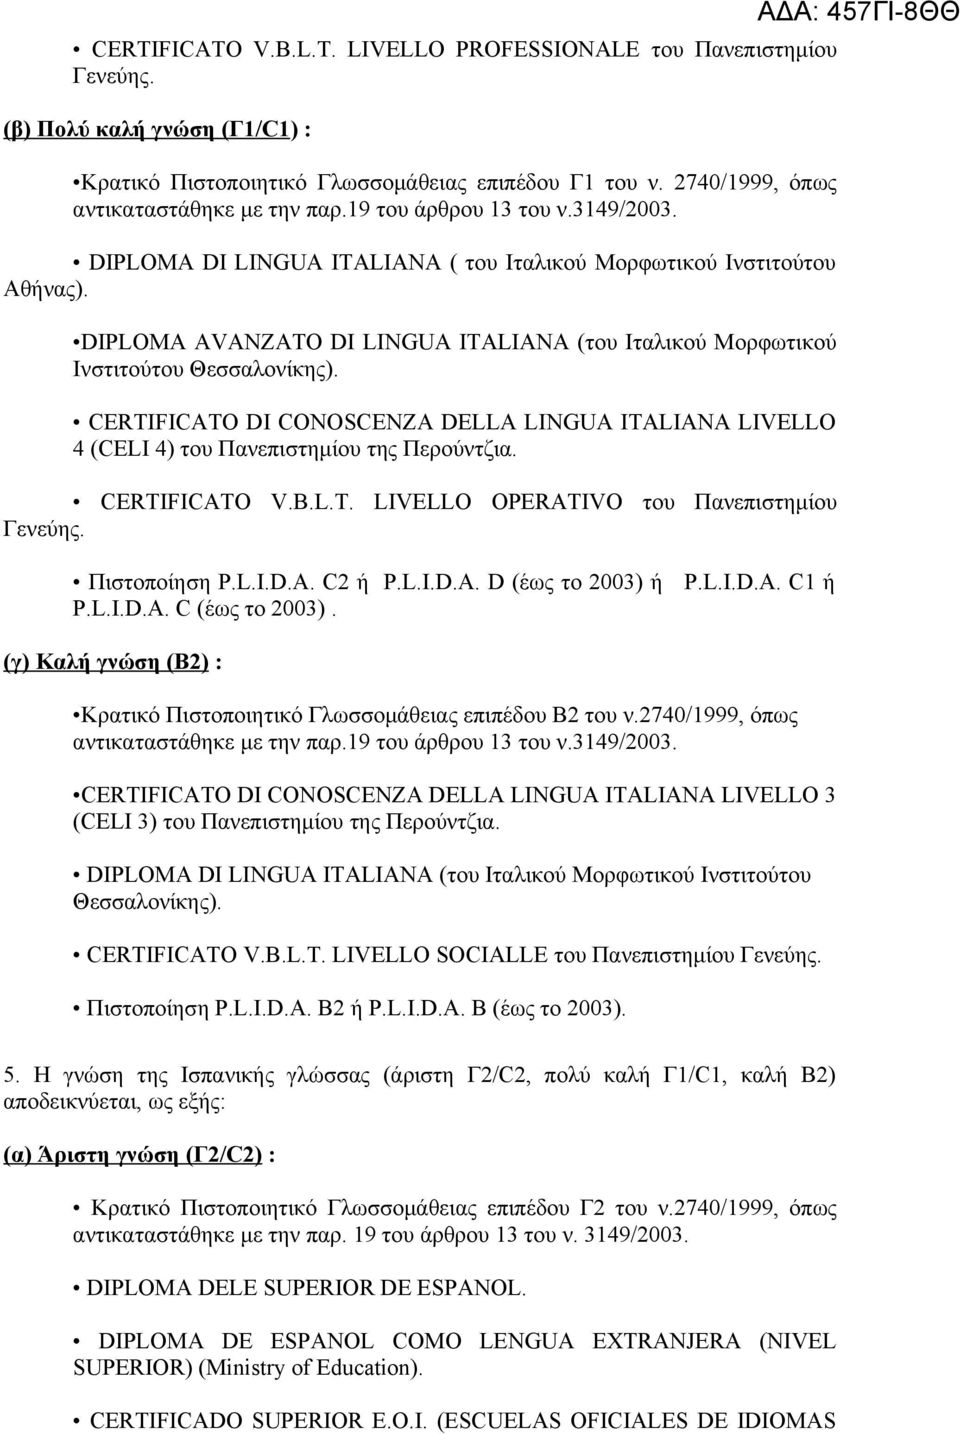 CERTIFICAΤO DI CONOSCENZA DELLA LINGUA ITALIANA LIVELLO 4 (CELI 4) του Πανεπιστημίου της Περούντζια. CERTIFICATO V.B.L.T. LIVELLO OPERATIVO του Πανεπιστημίου Γενεύης. Πιστοποίηση P.L.I.D.A. C2 ή P.L.I.D.A. D (έως το 2003) ή P.